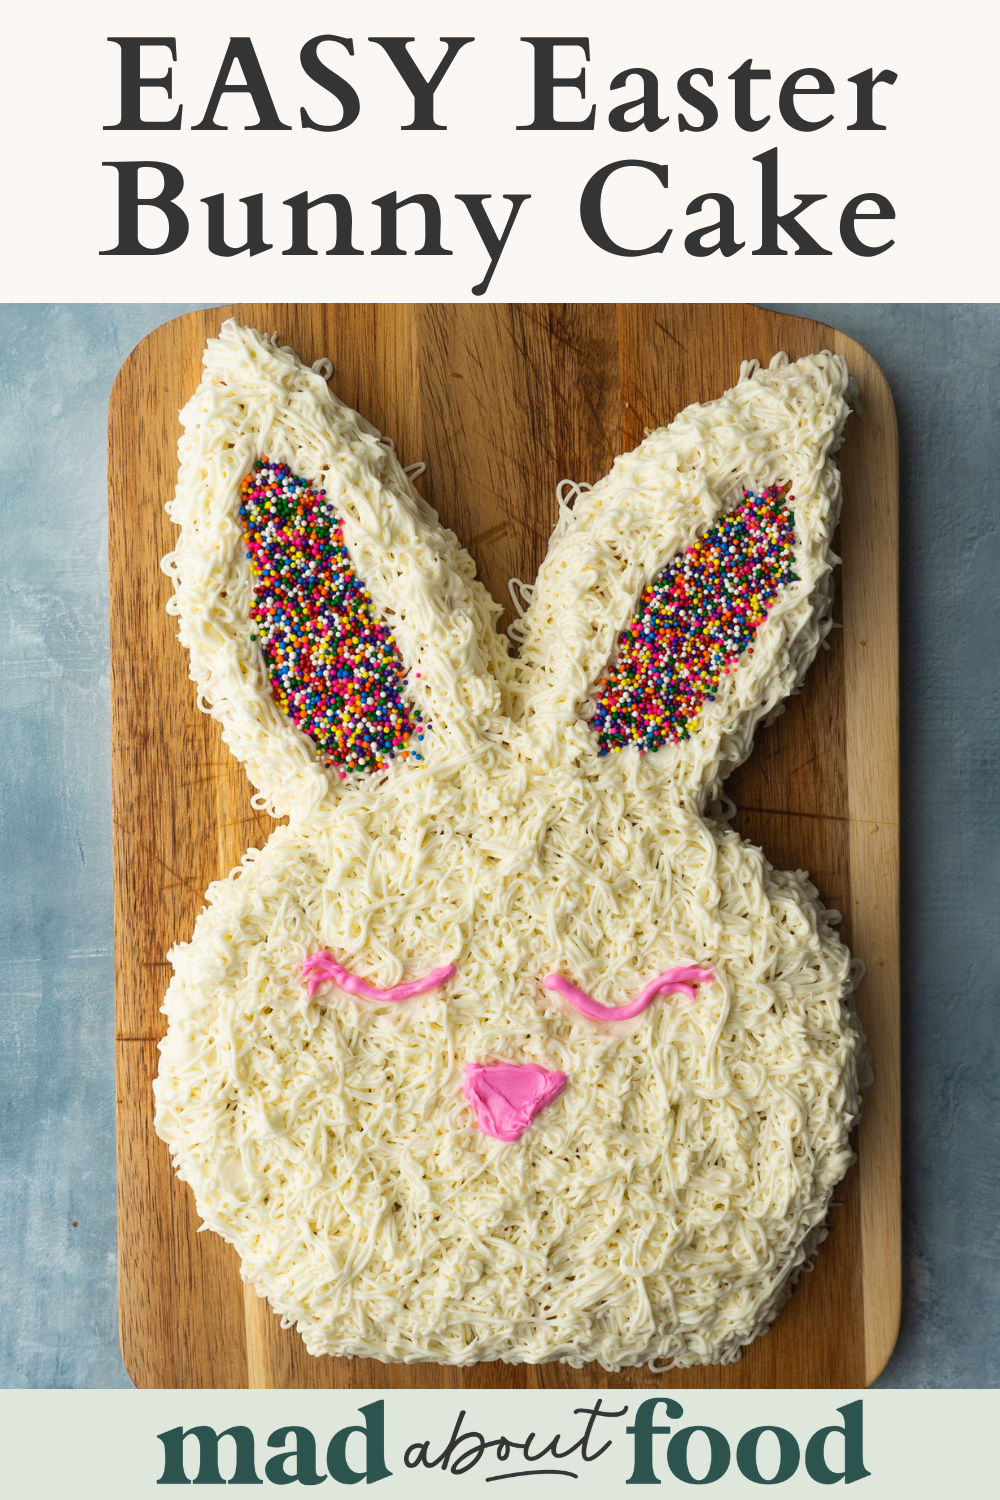 Image for pinning Easy Easter Bunny Cake Recipe on Pinterest